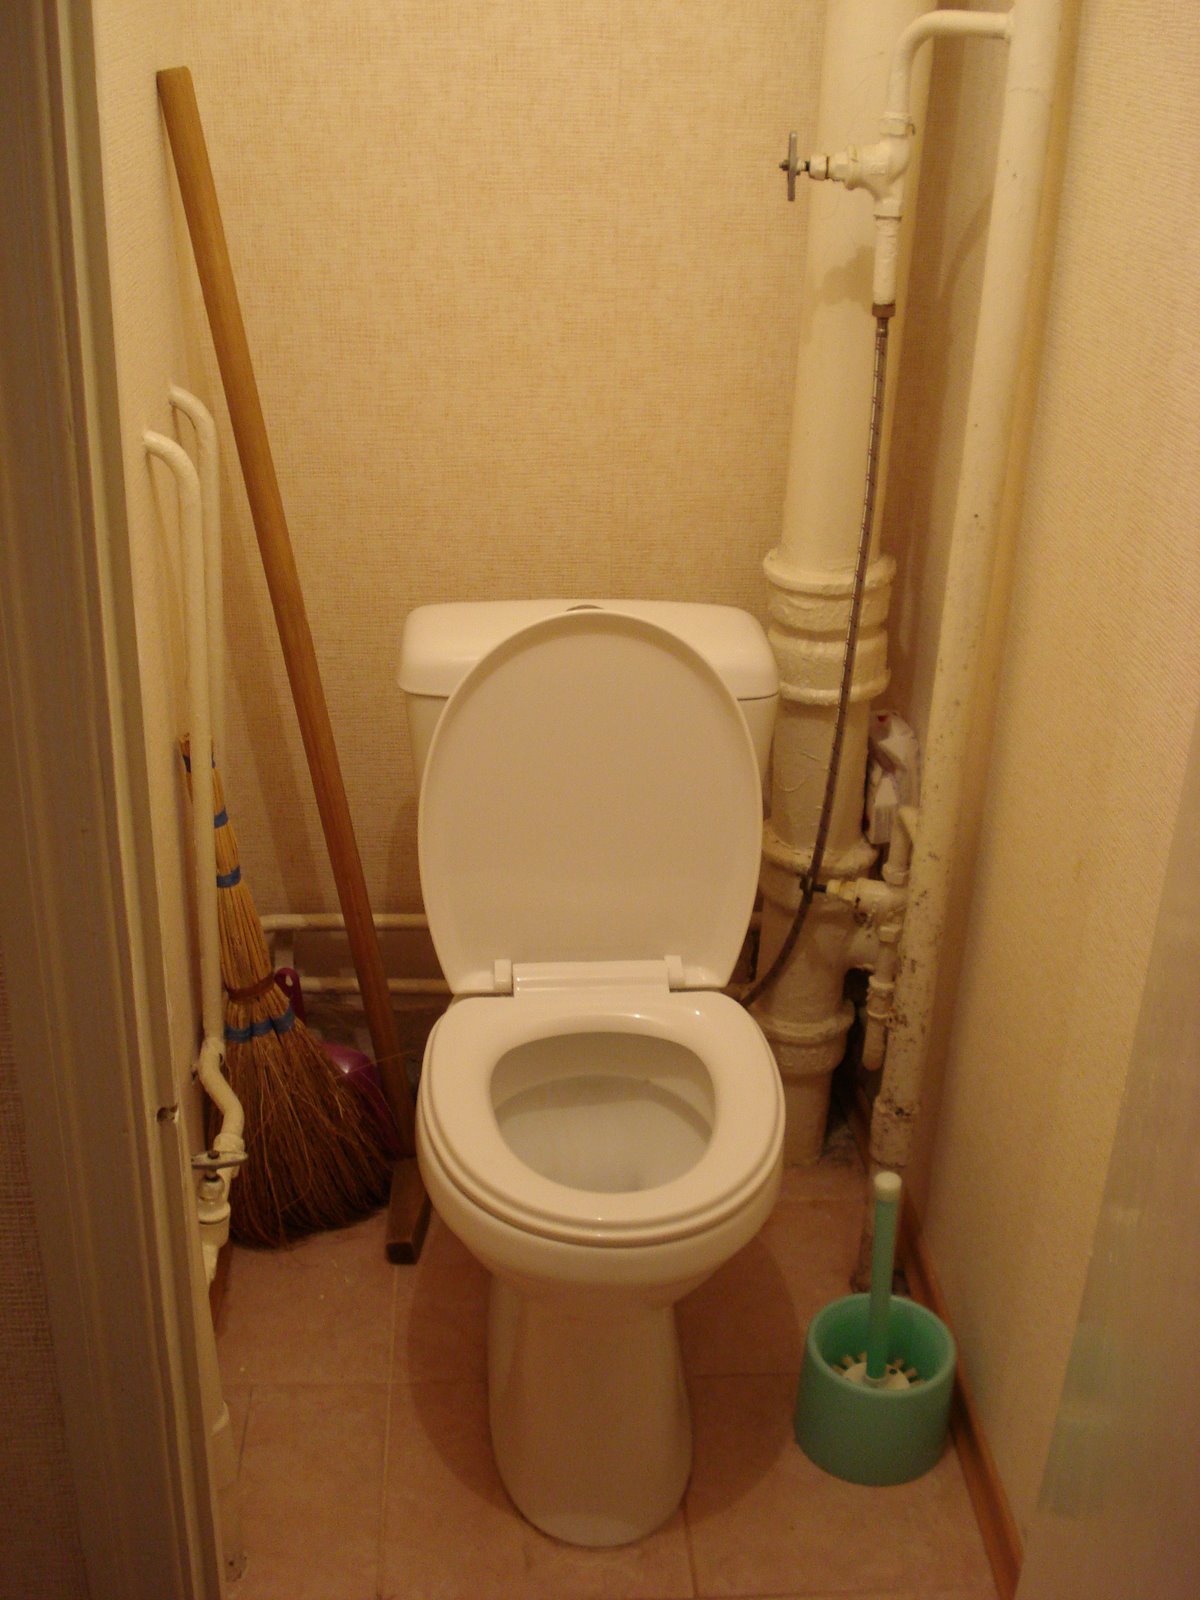 [The+Toilet.JPG]